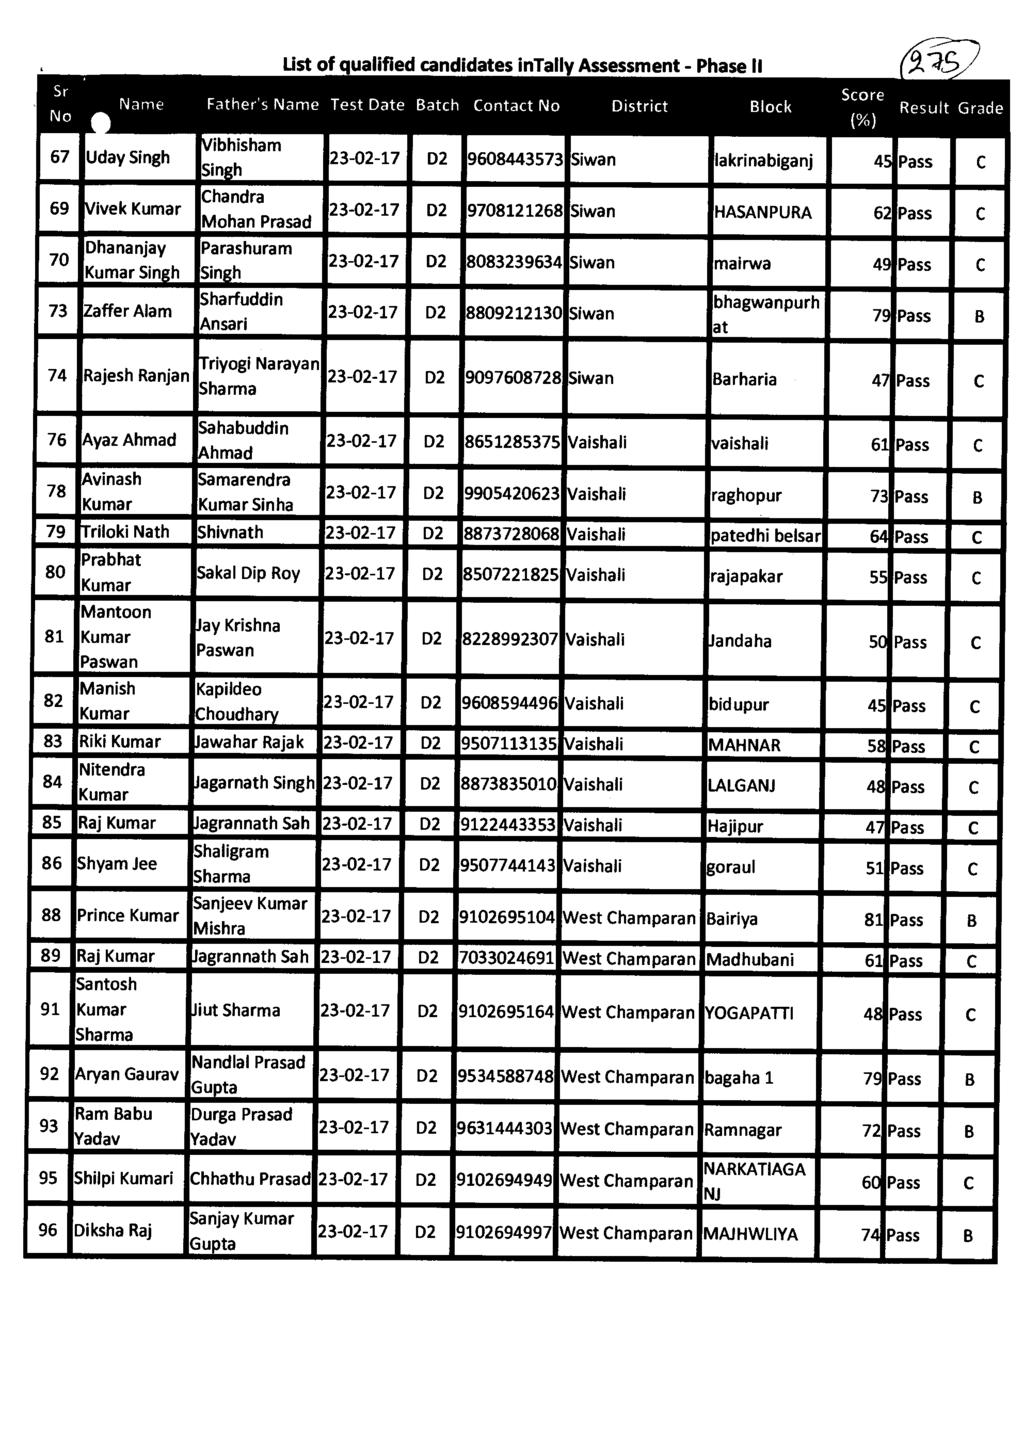 . Sr No 67 Name Uday 69 Vivek 70 Dhananjay 73 Zaffer Alam Father's Name Vibhisham Chandra Mohan Parashuram Sharfuddin Ansari List of.